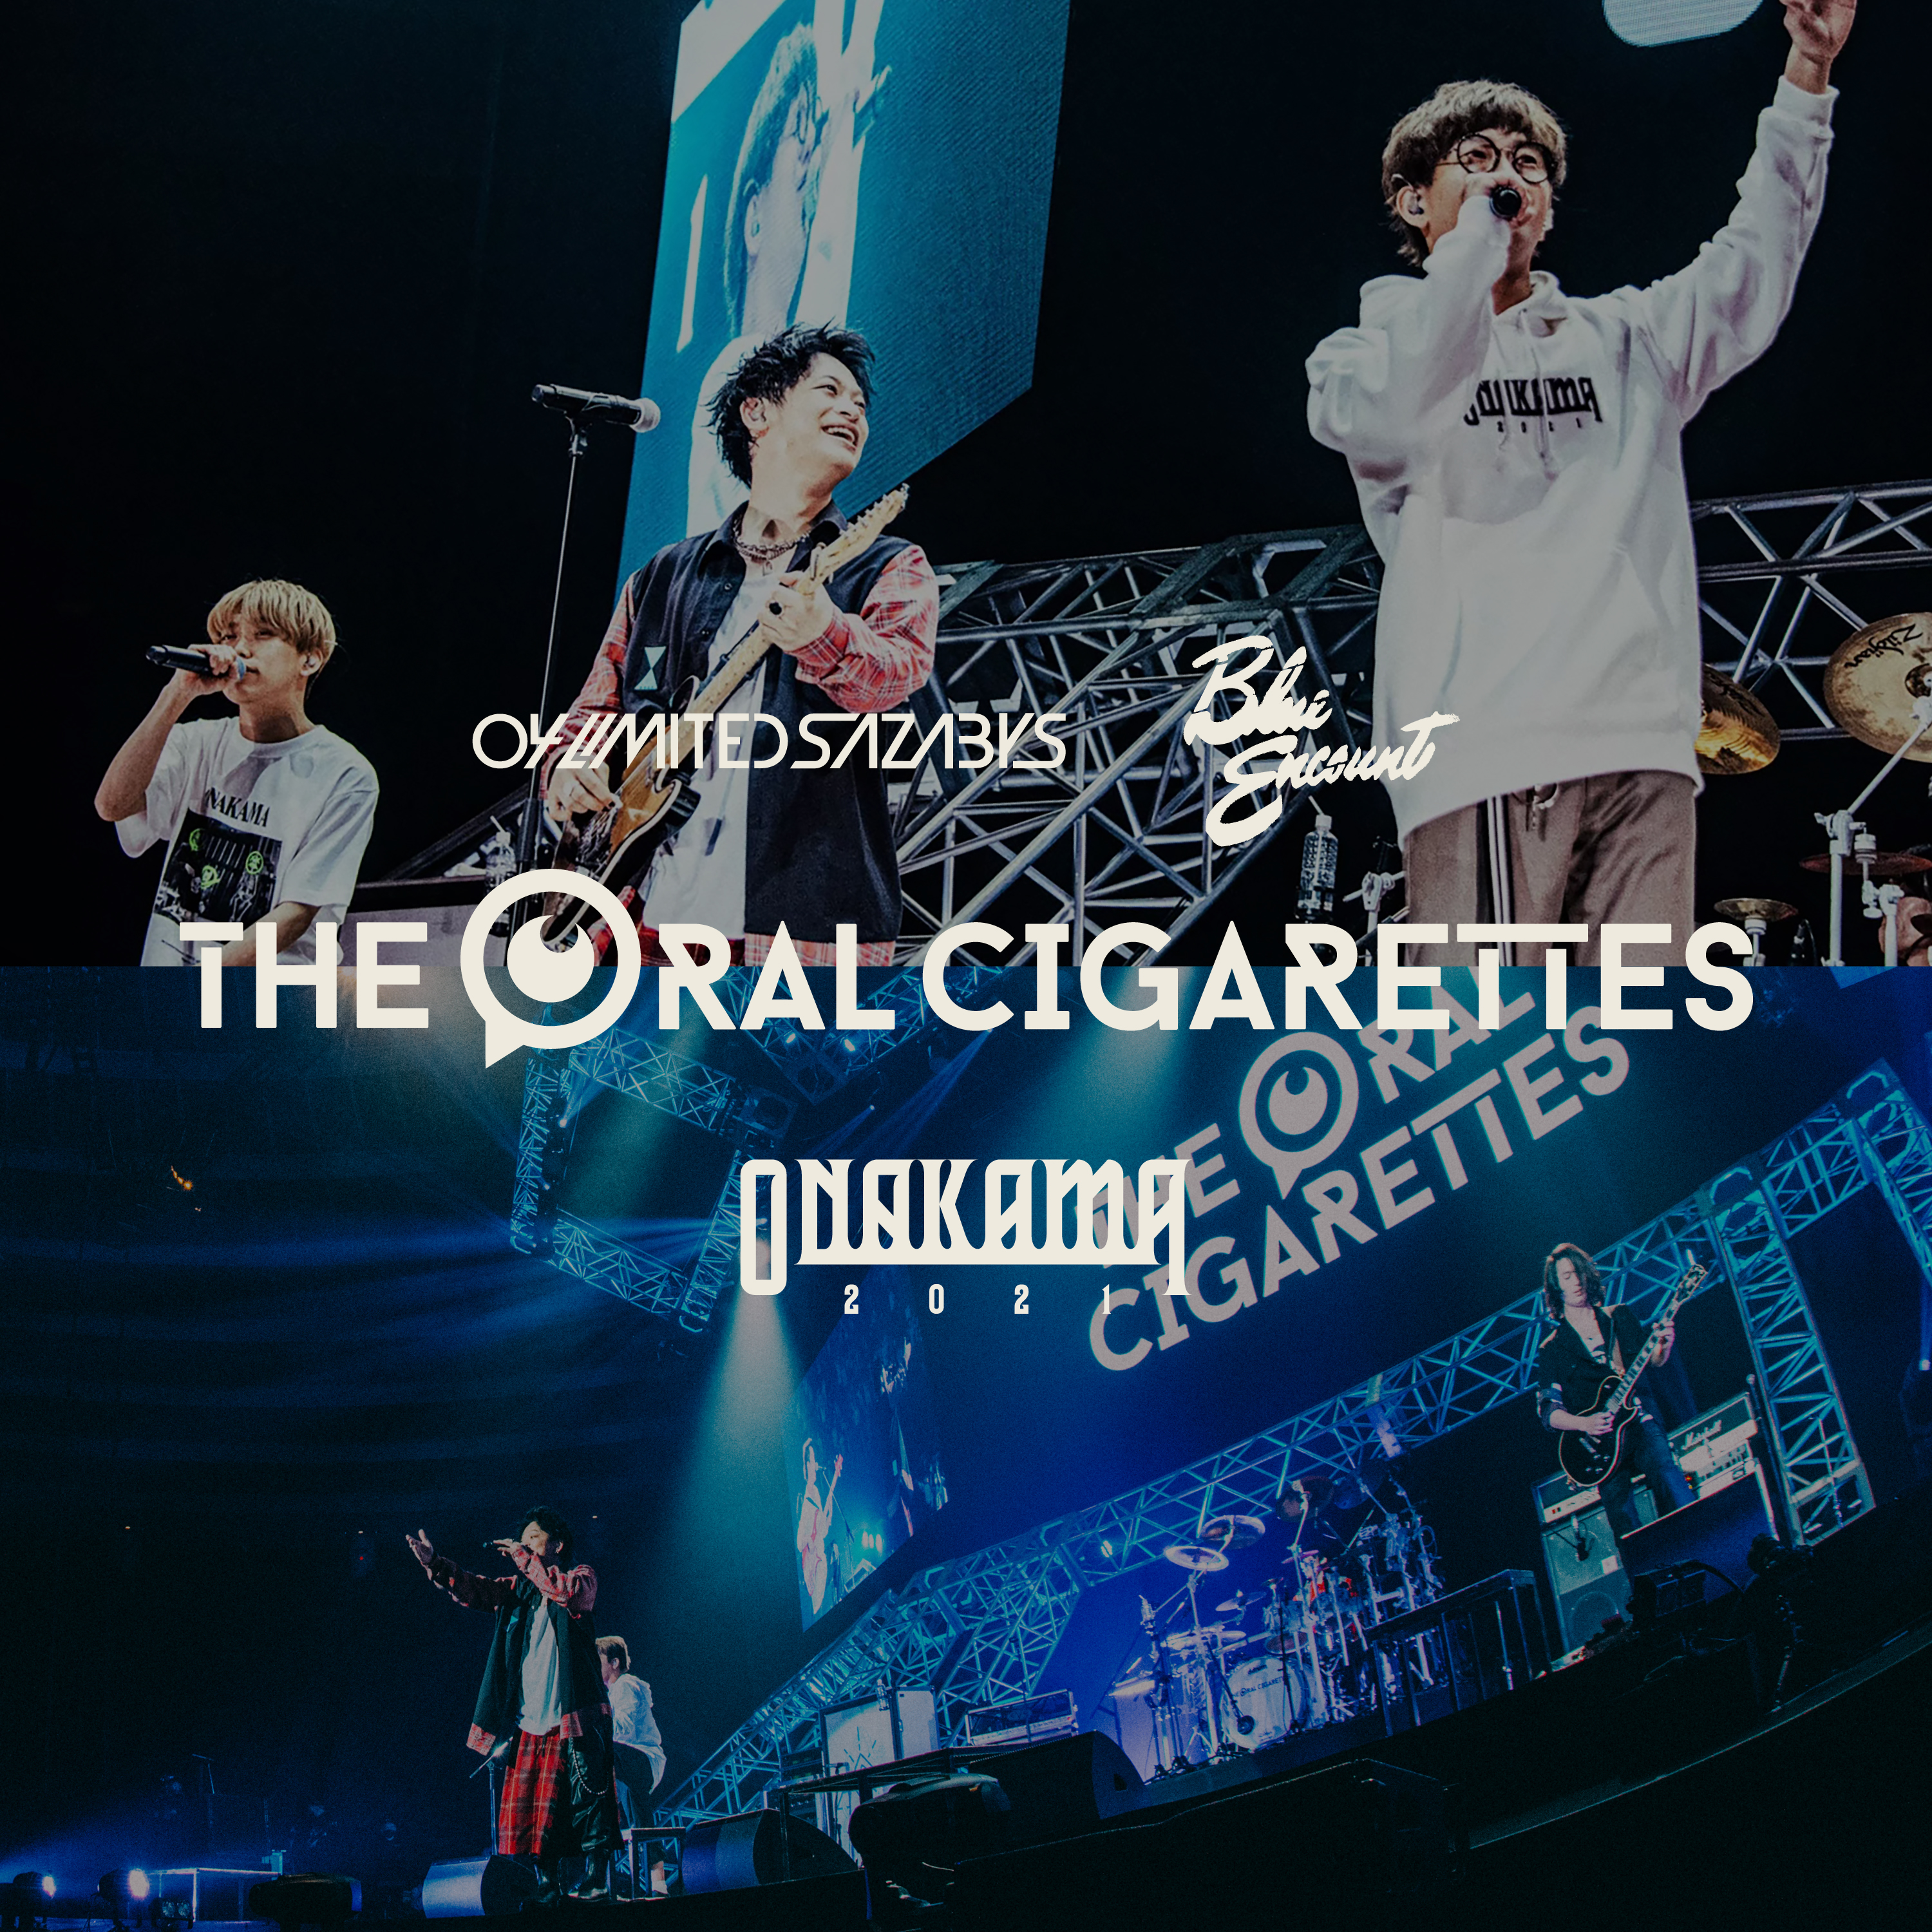 Onakama 2021 04 Limited Sazabys The Oral Cigarettes Blue Encount